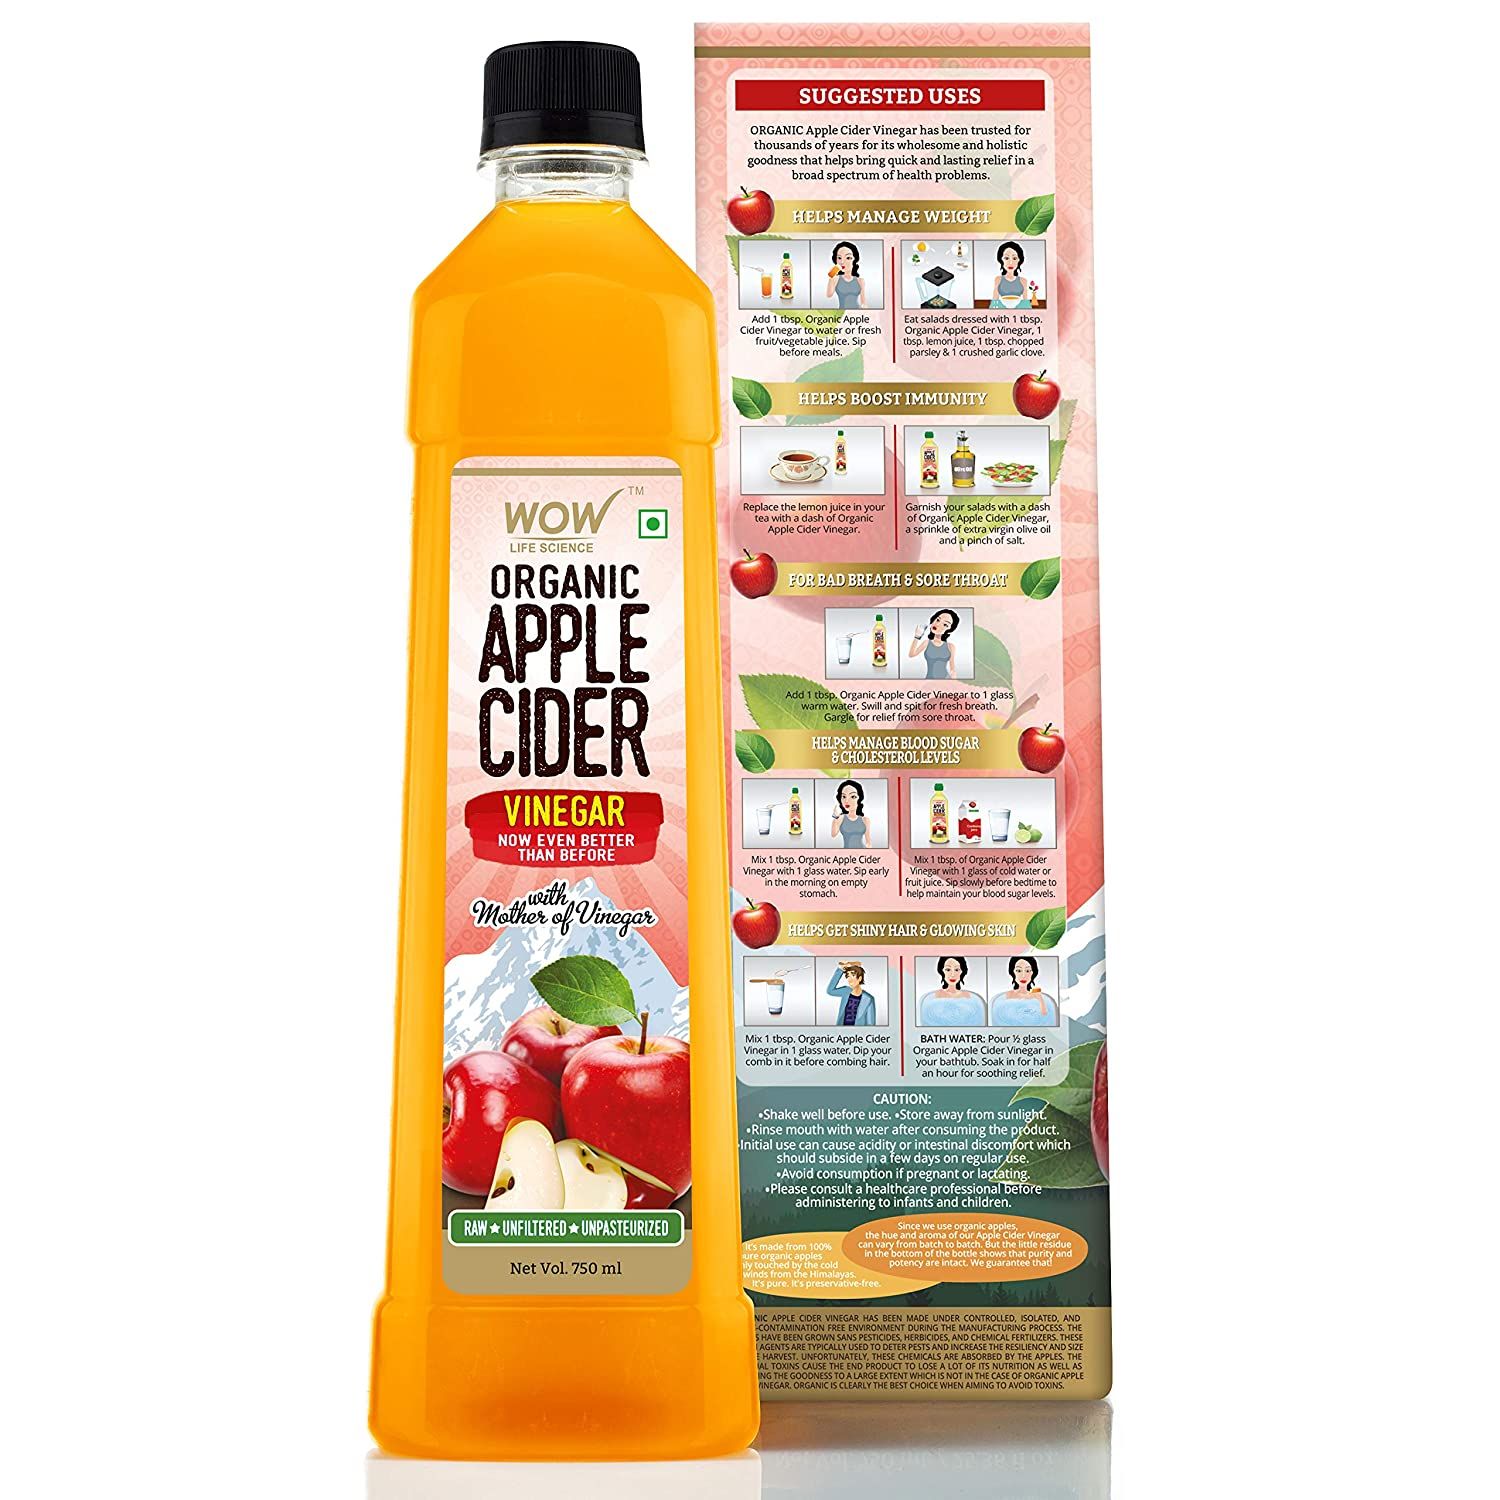 WOW Life Science Organic Apple Cider Vinegar Image